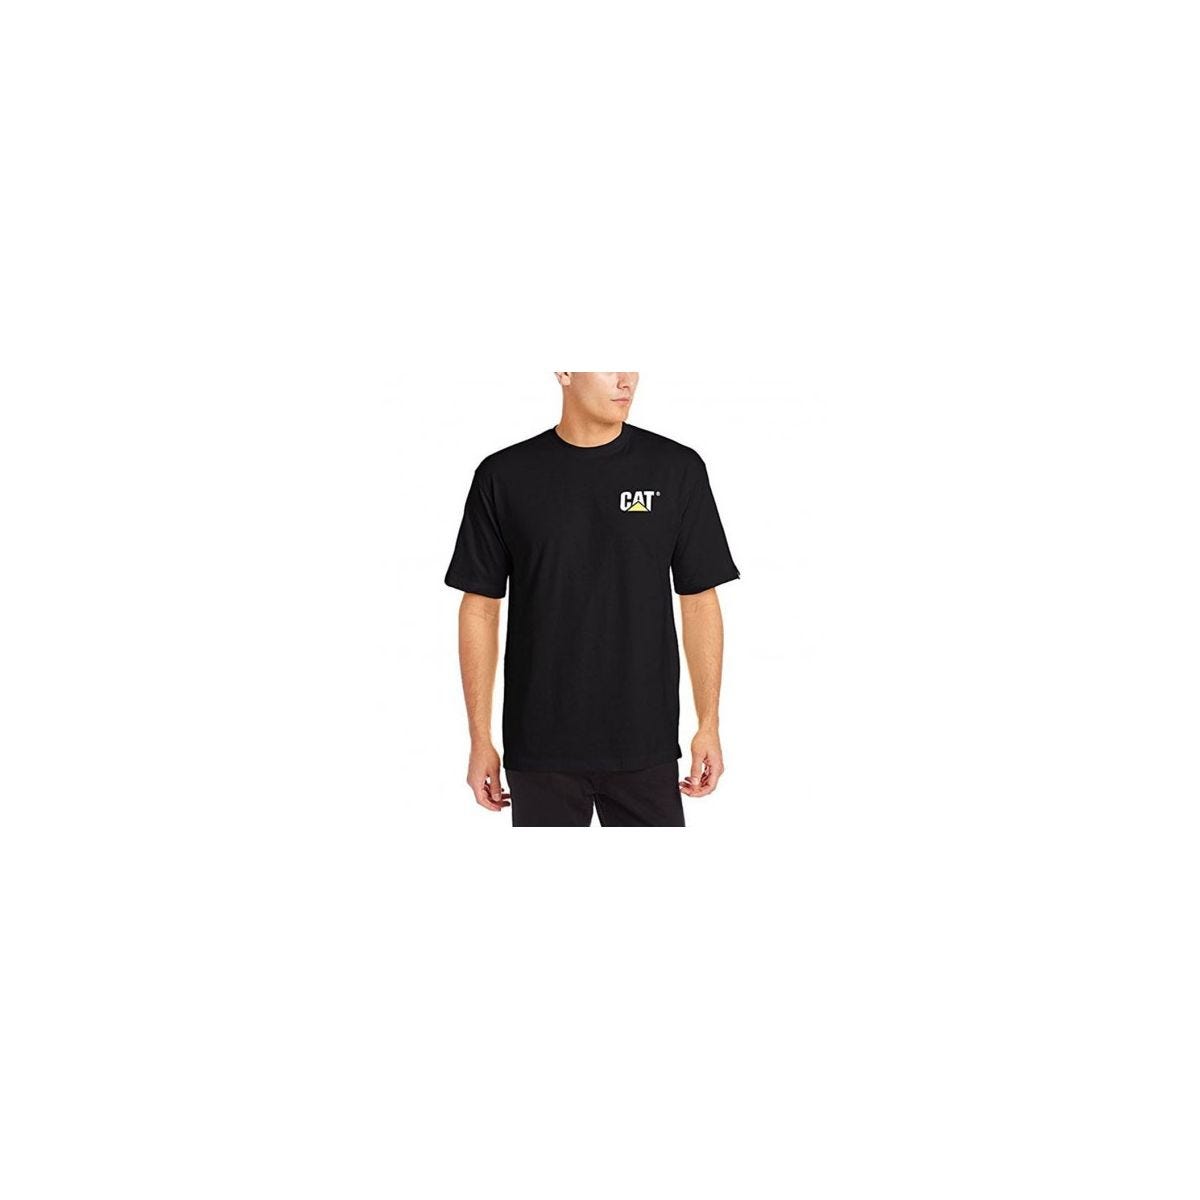 Tee-Shirt coton TRADEMARK W05324 Noir - Caterpillar - Taille M 0